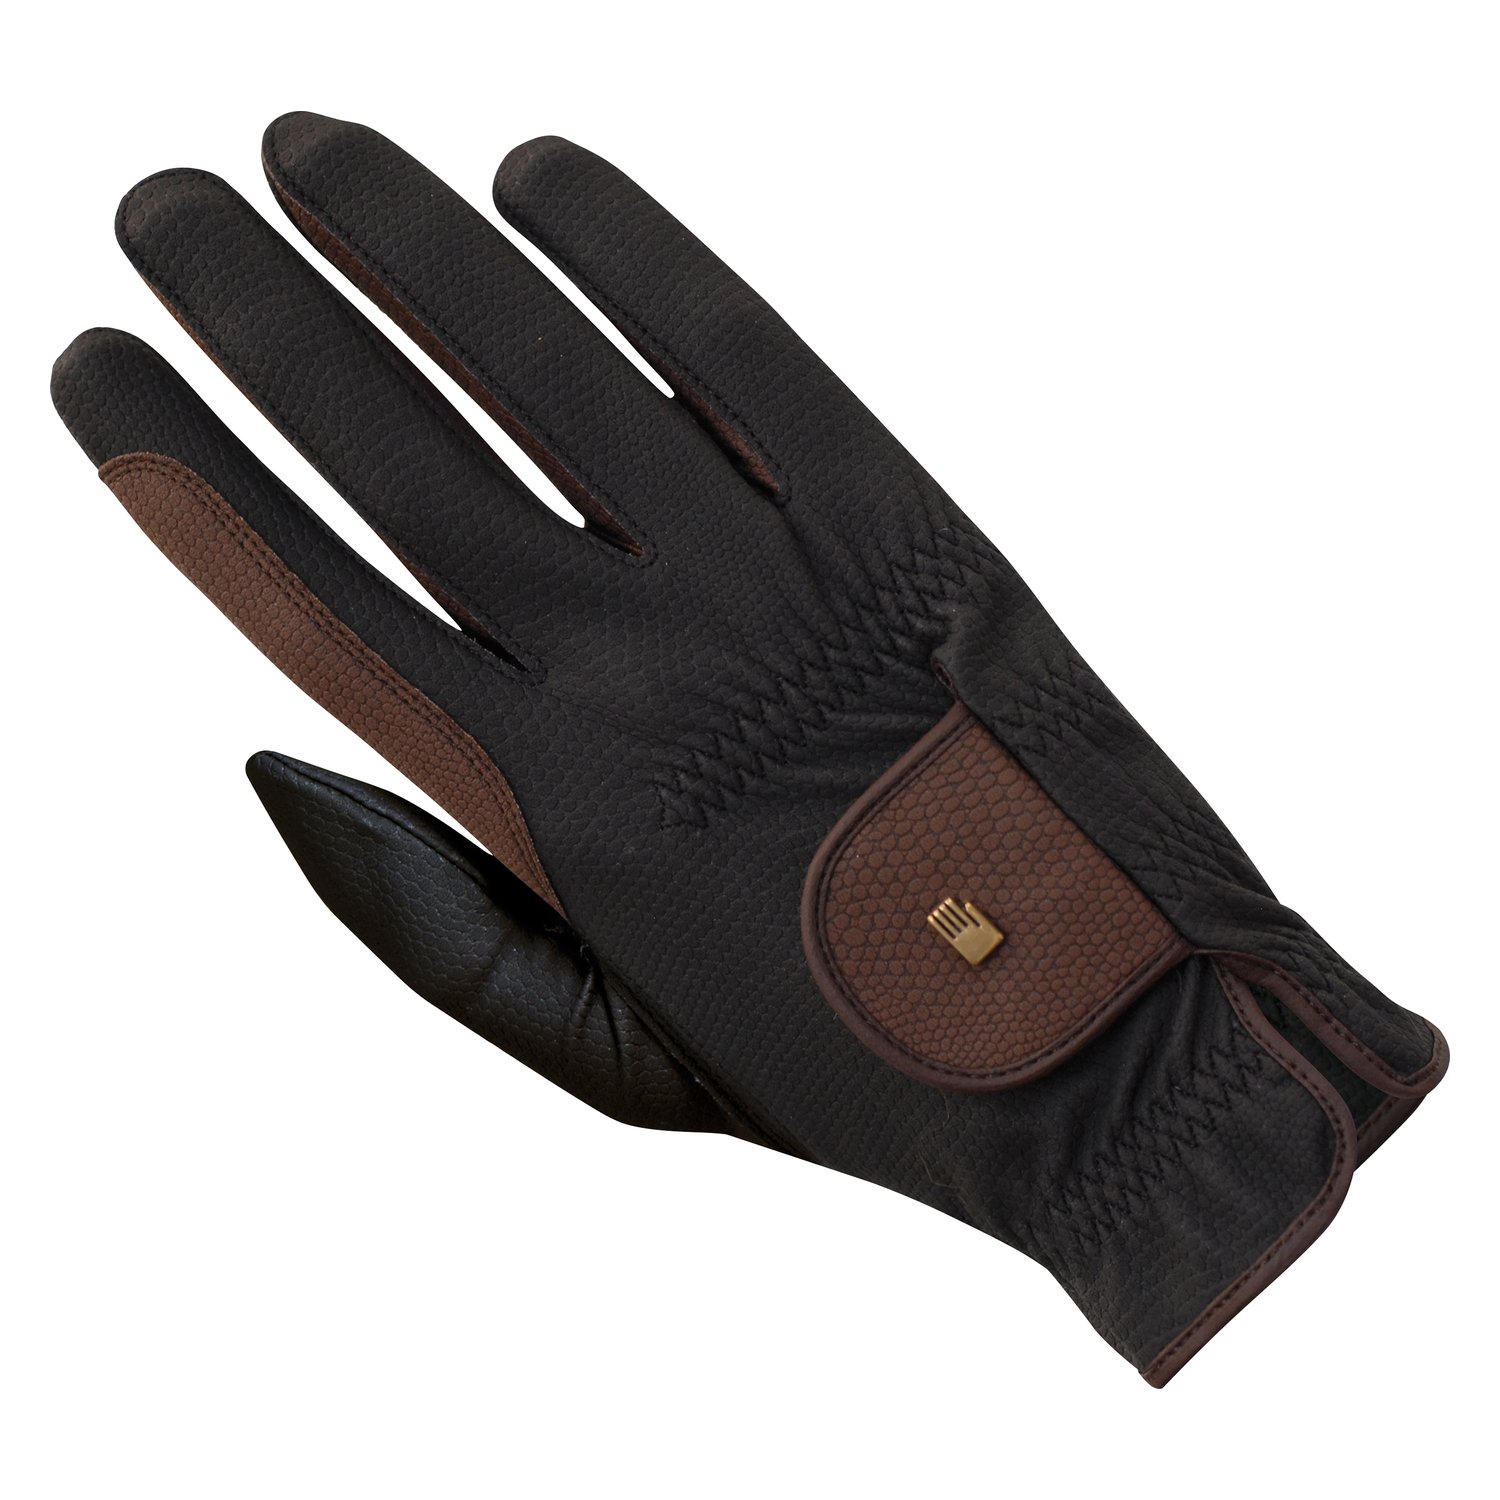 Roeckl Handschuhe Malta Winter schwarz/mokka | 8,0